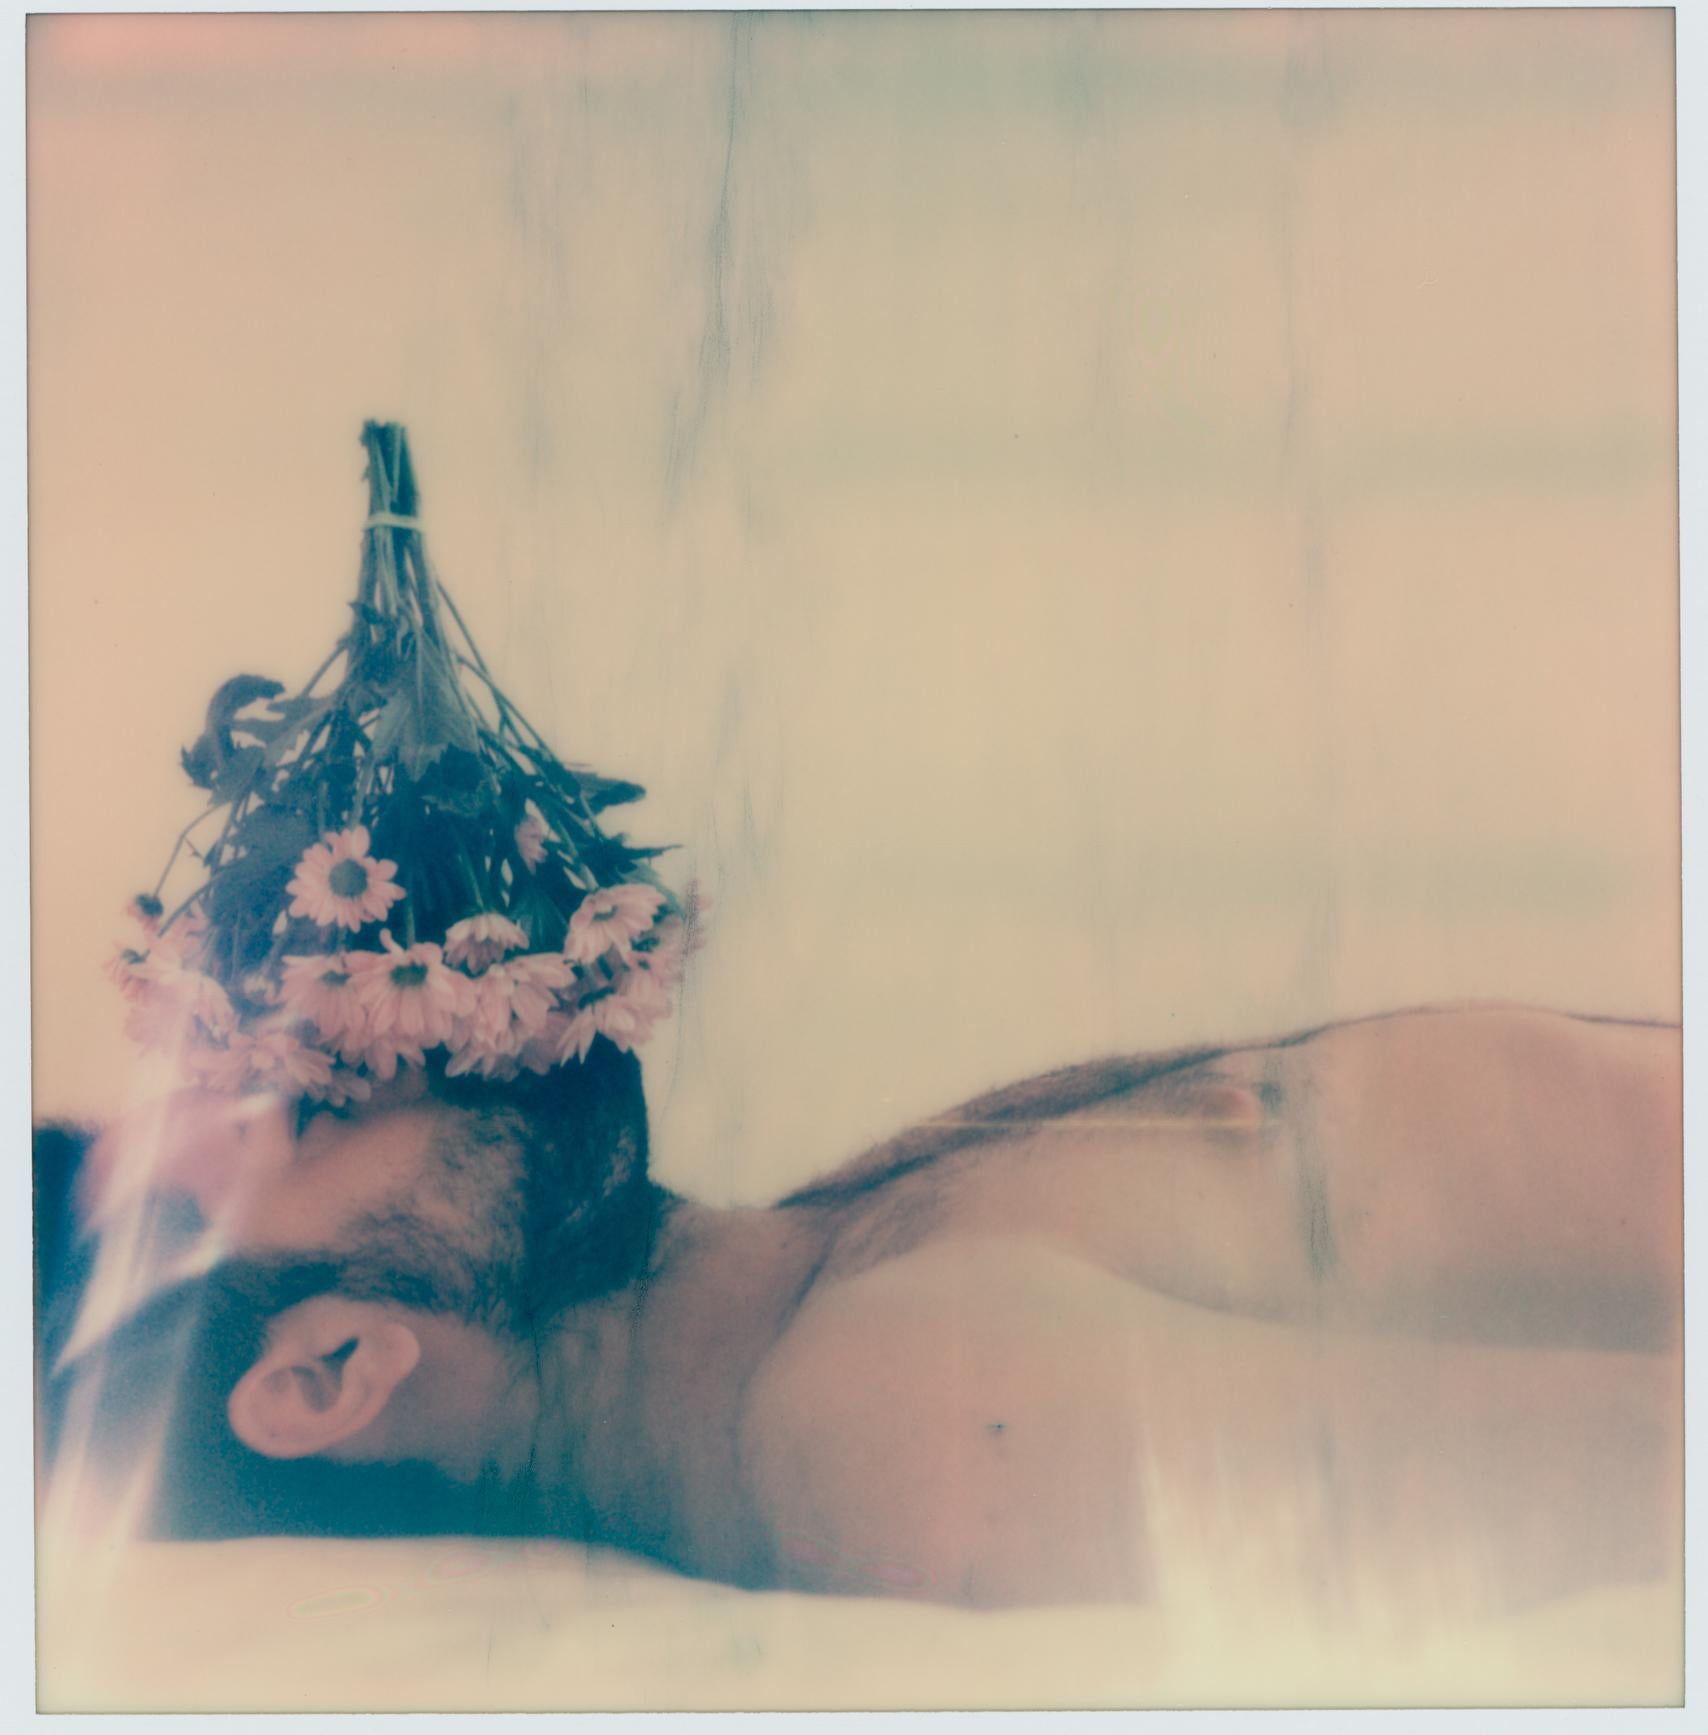 Ariel Shelleg Color Photograph - THE GROUND - SELF PORTRAIT - 21st Century, Contemporary, Polaroid, Men, Love